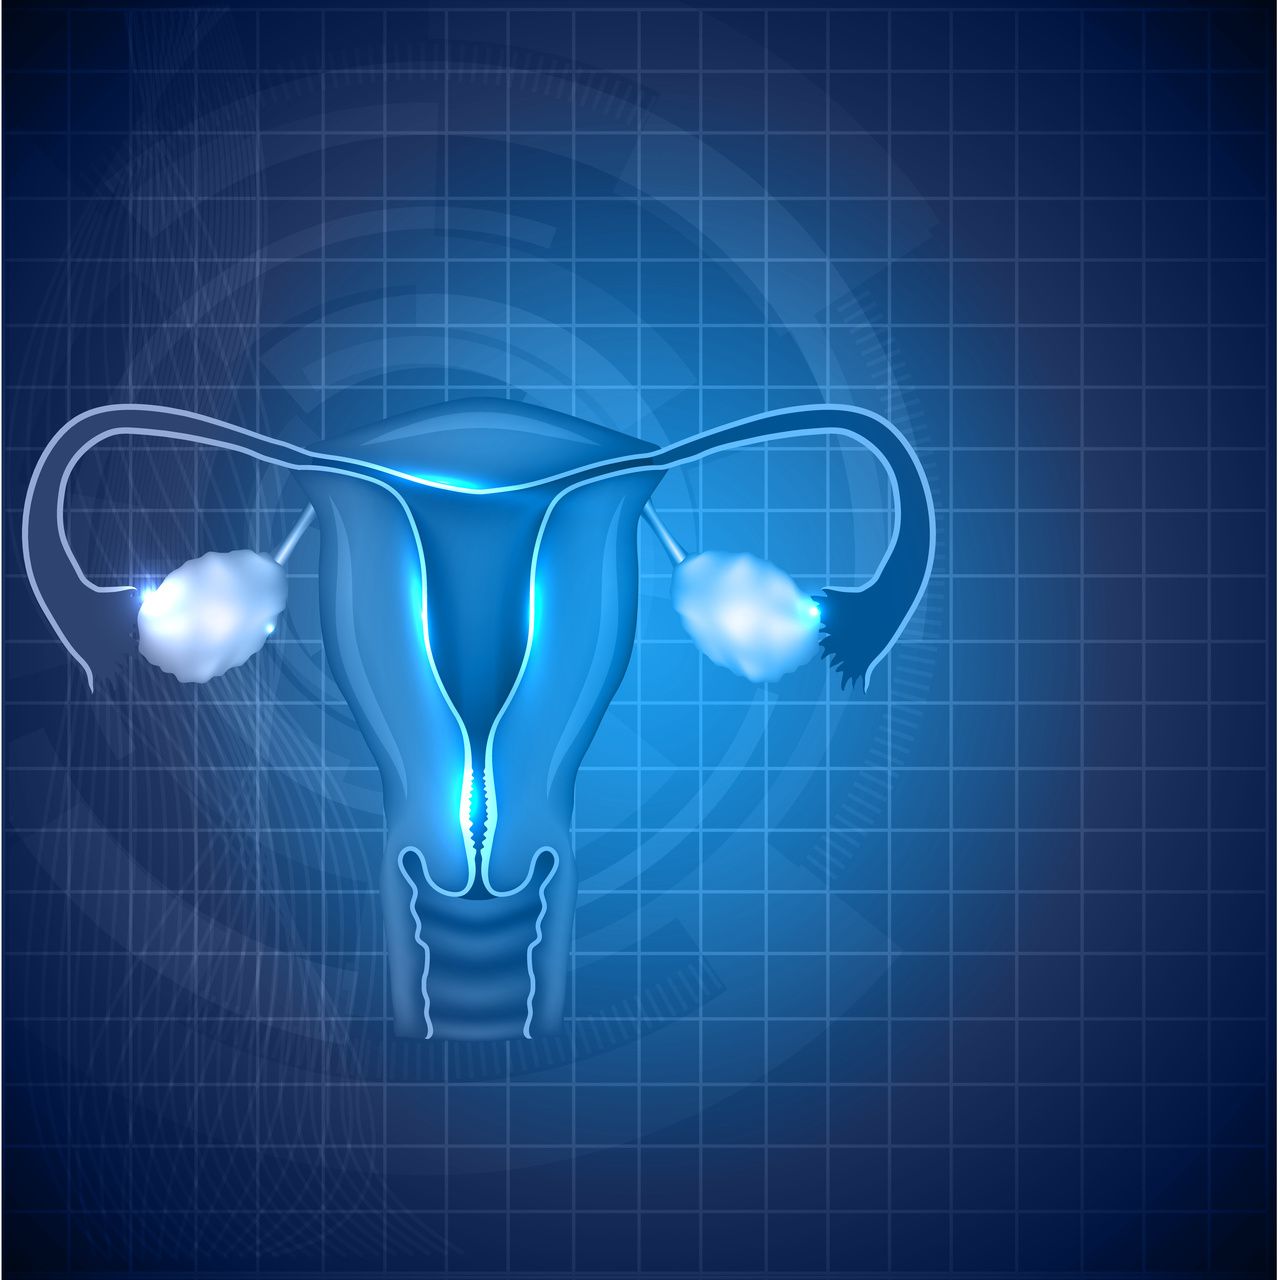 Image of ovaries and uterus